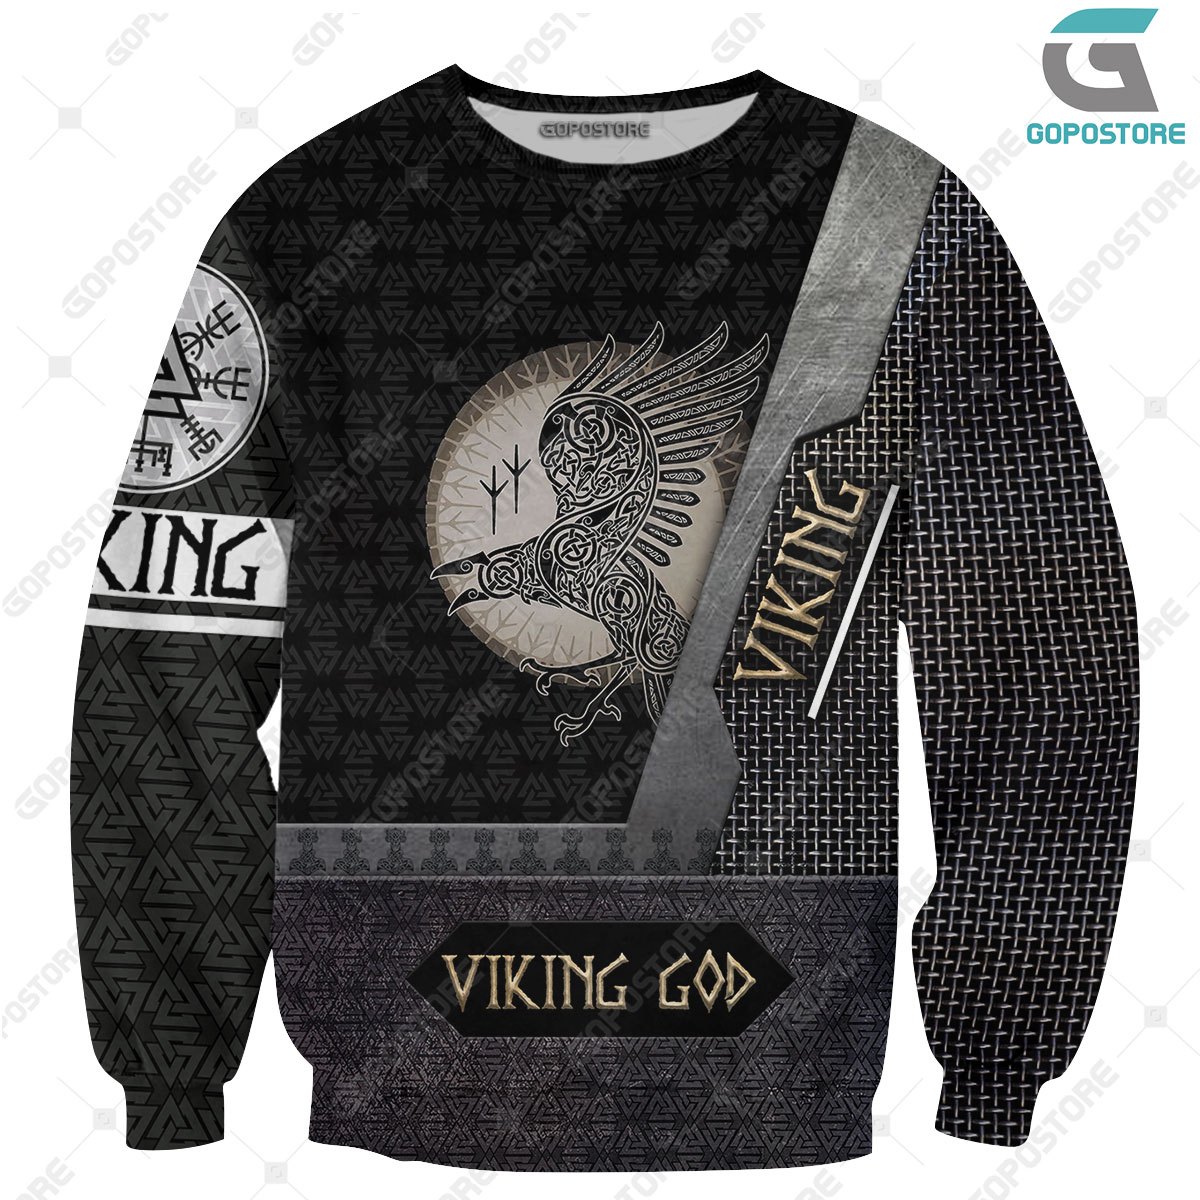 Viking god huginn and muninn full printing sweatshirt